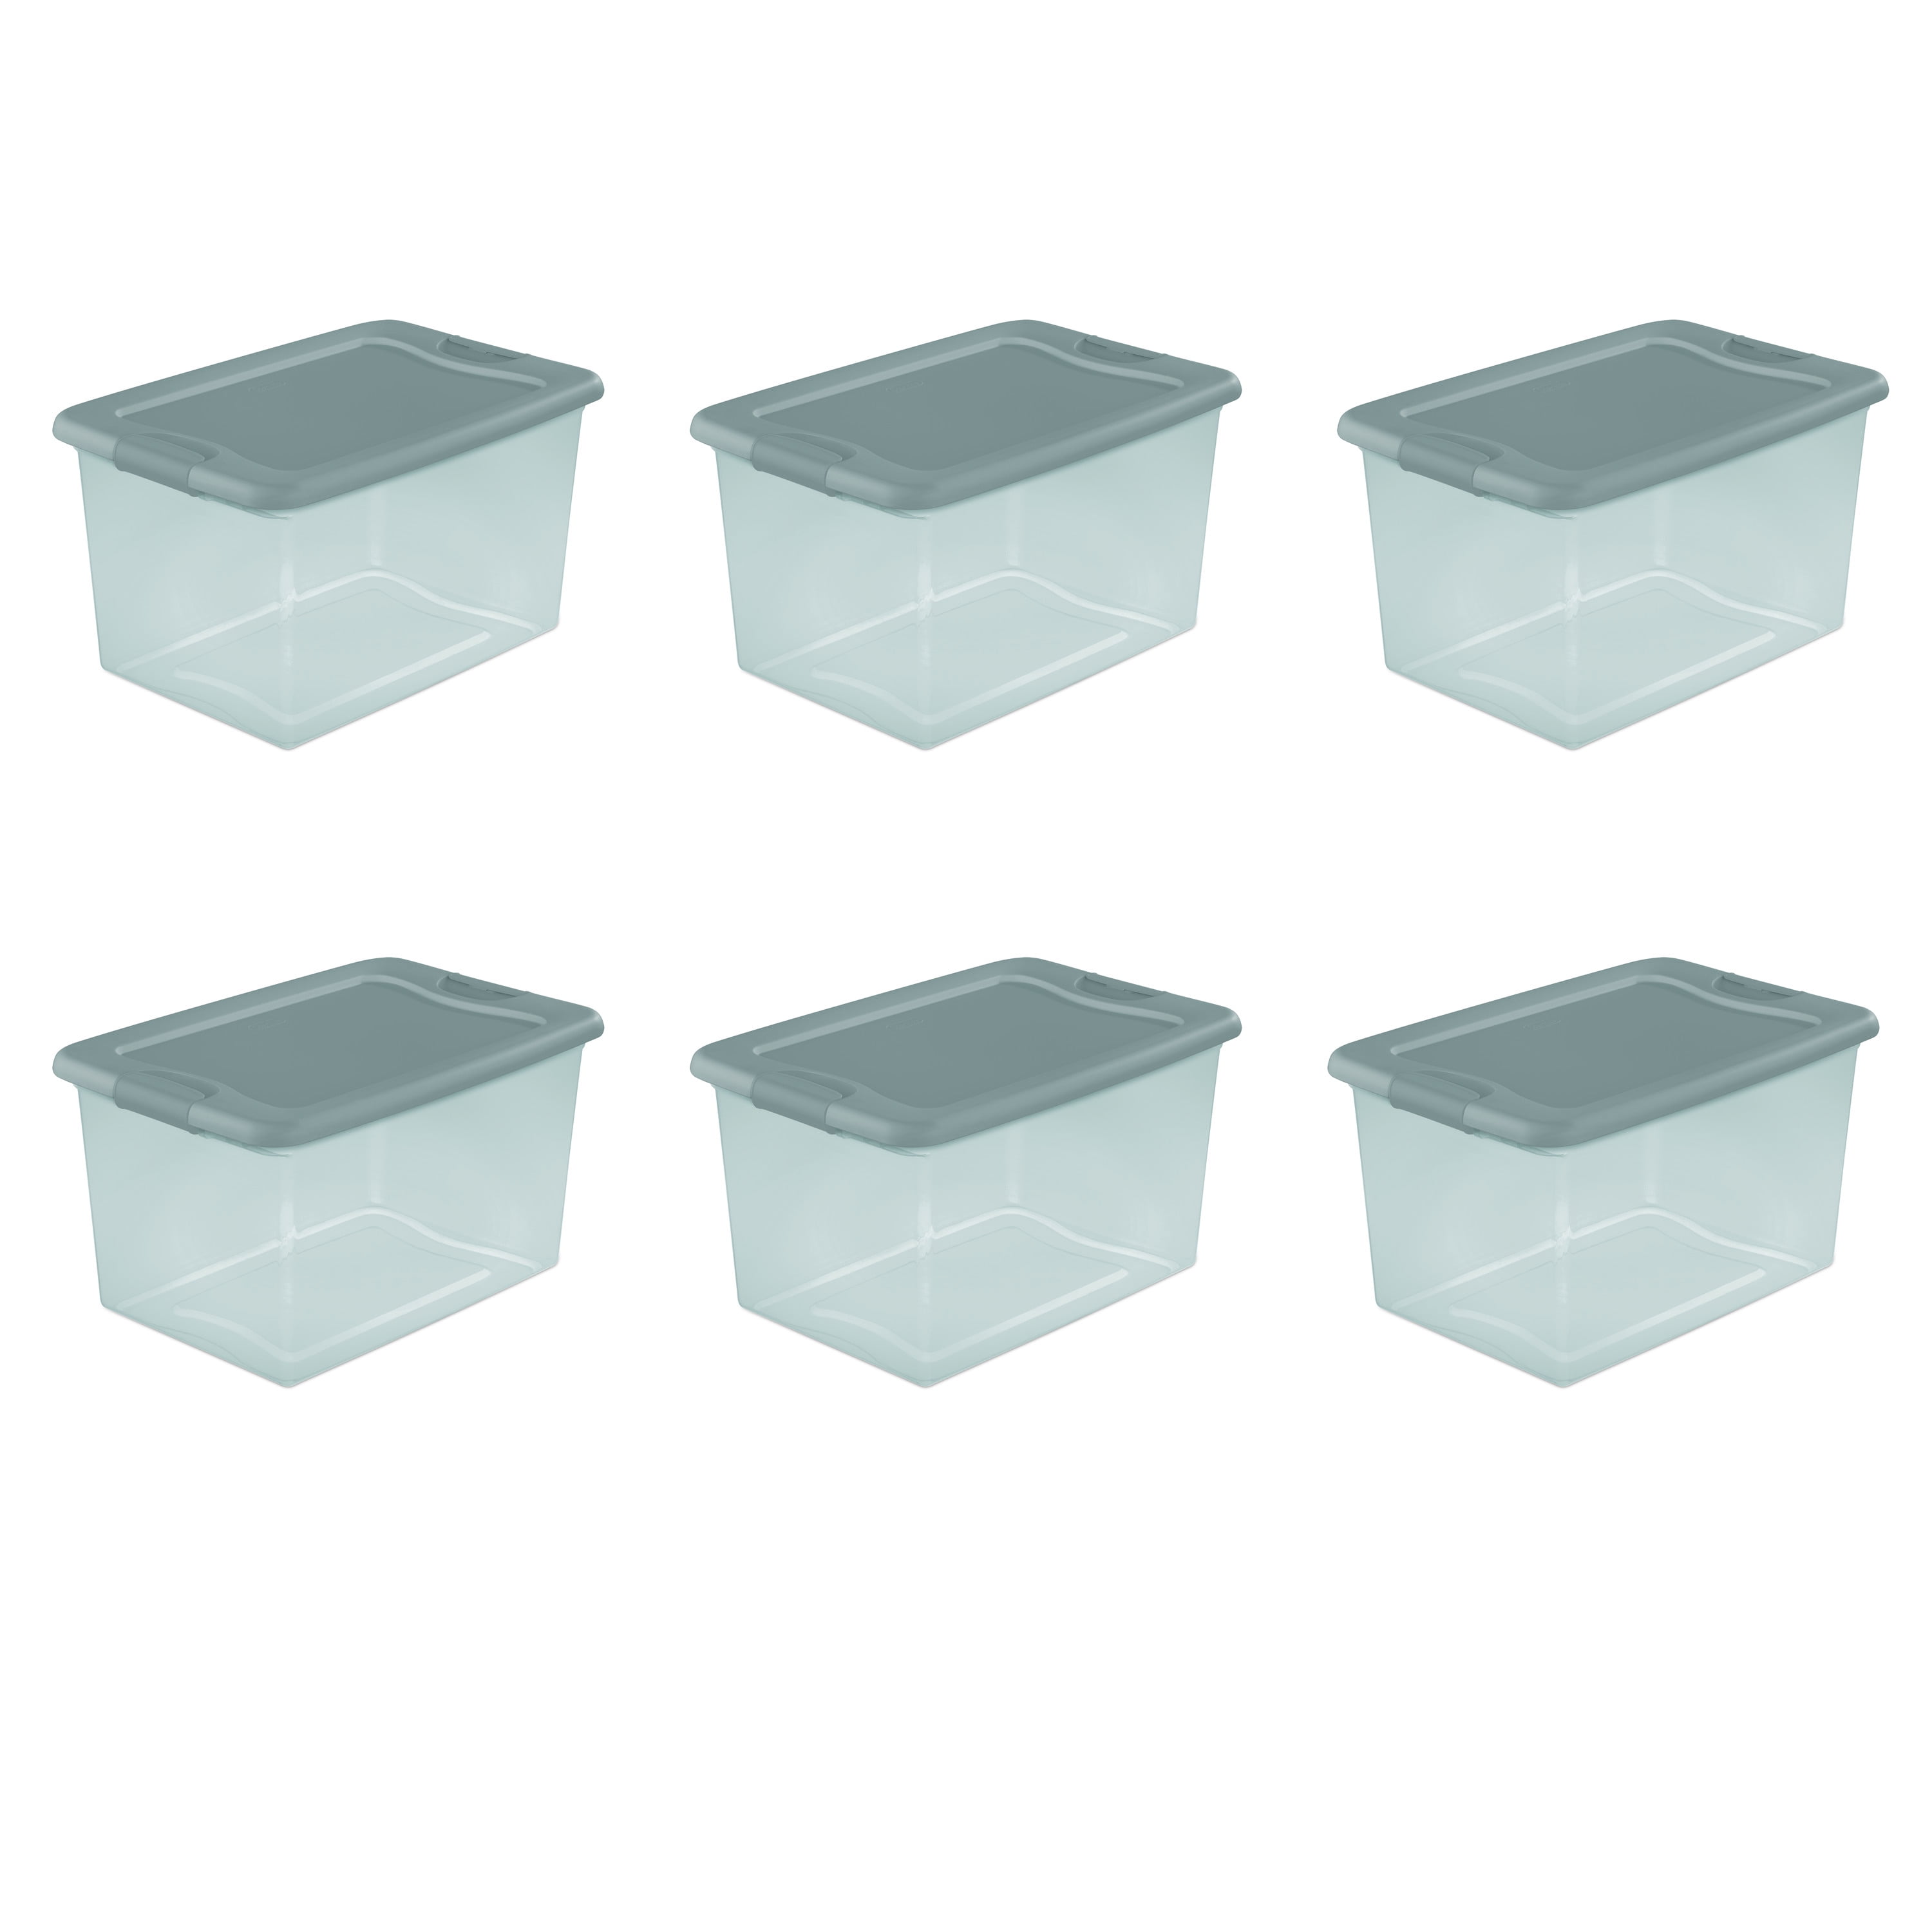 64 Qt Latching Box Plastic Bin Organizer Shop Storage Containers Tote Set  of 6